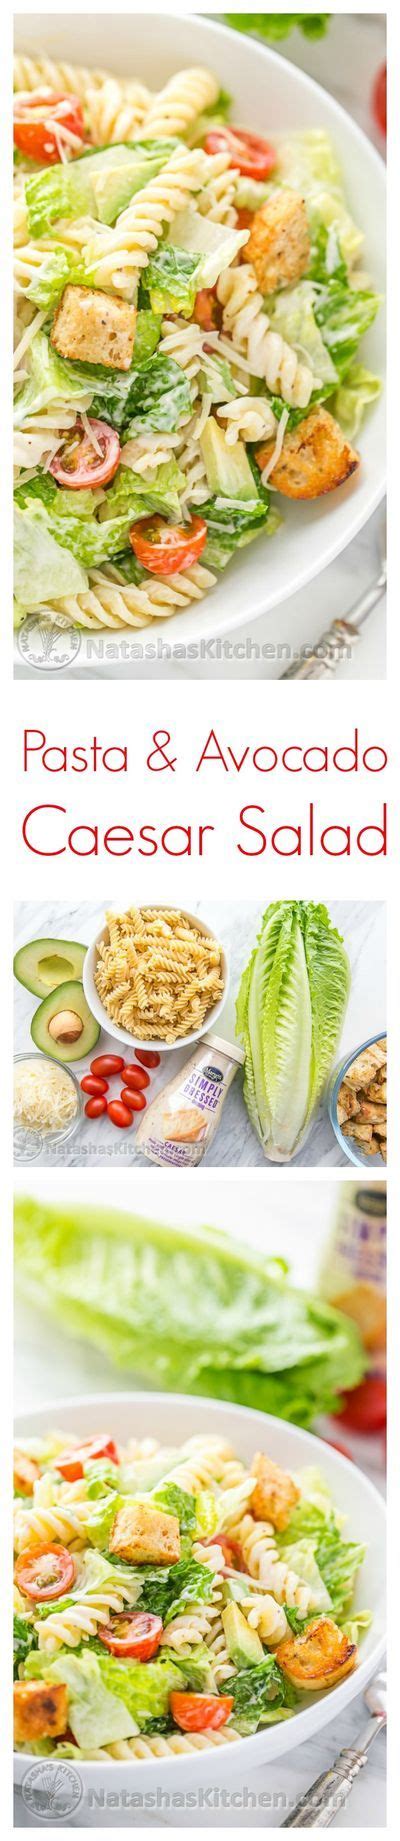 Avocado corn salad (video) asian chopped salad recipe. Caesar Pasta Salad Recipe - NatashasKitchen.com in 2020 ...